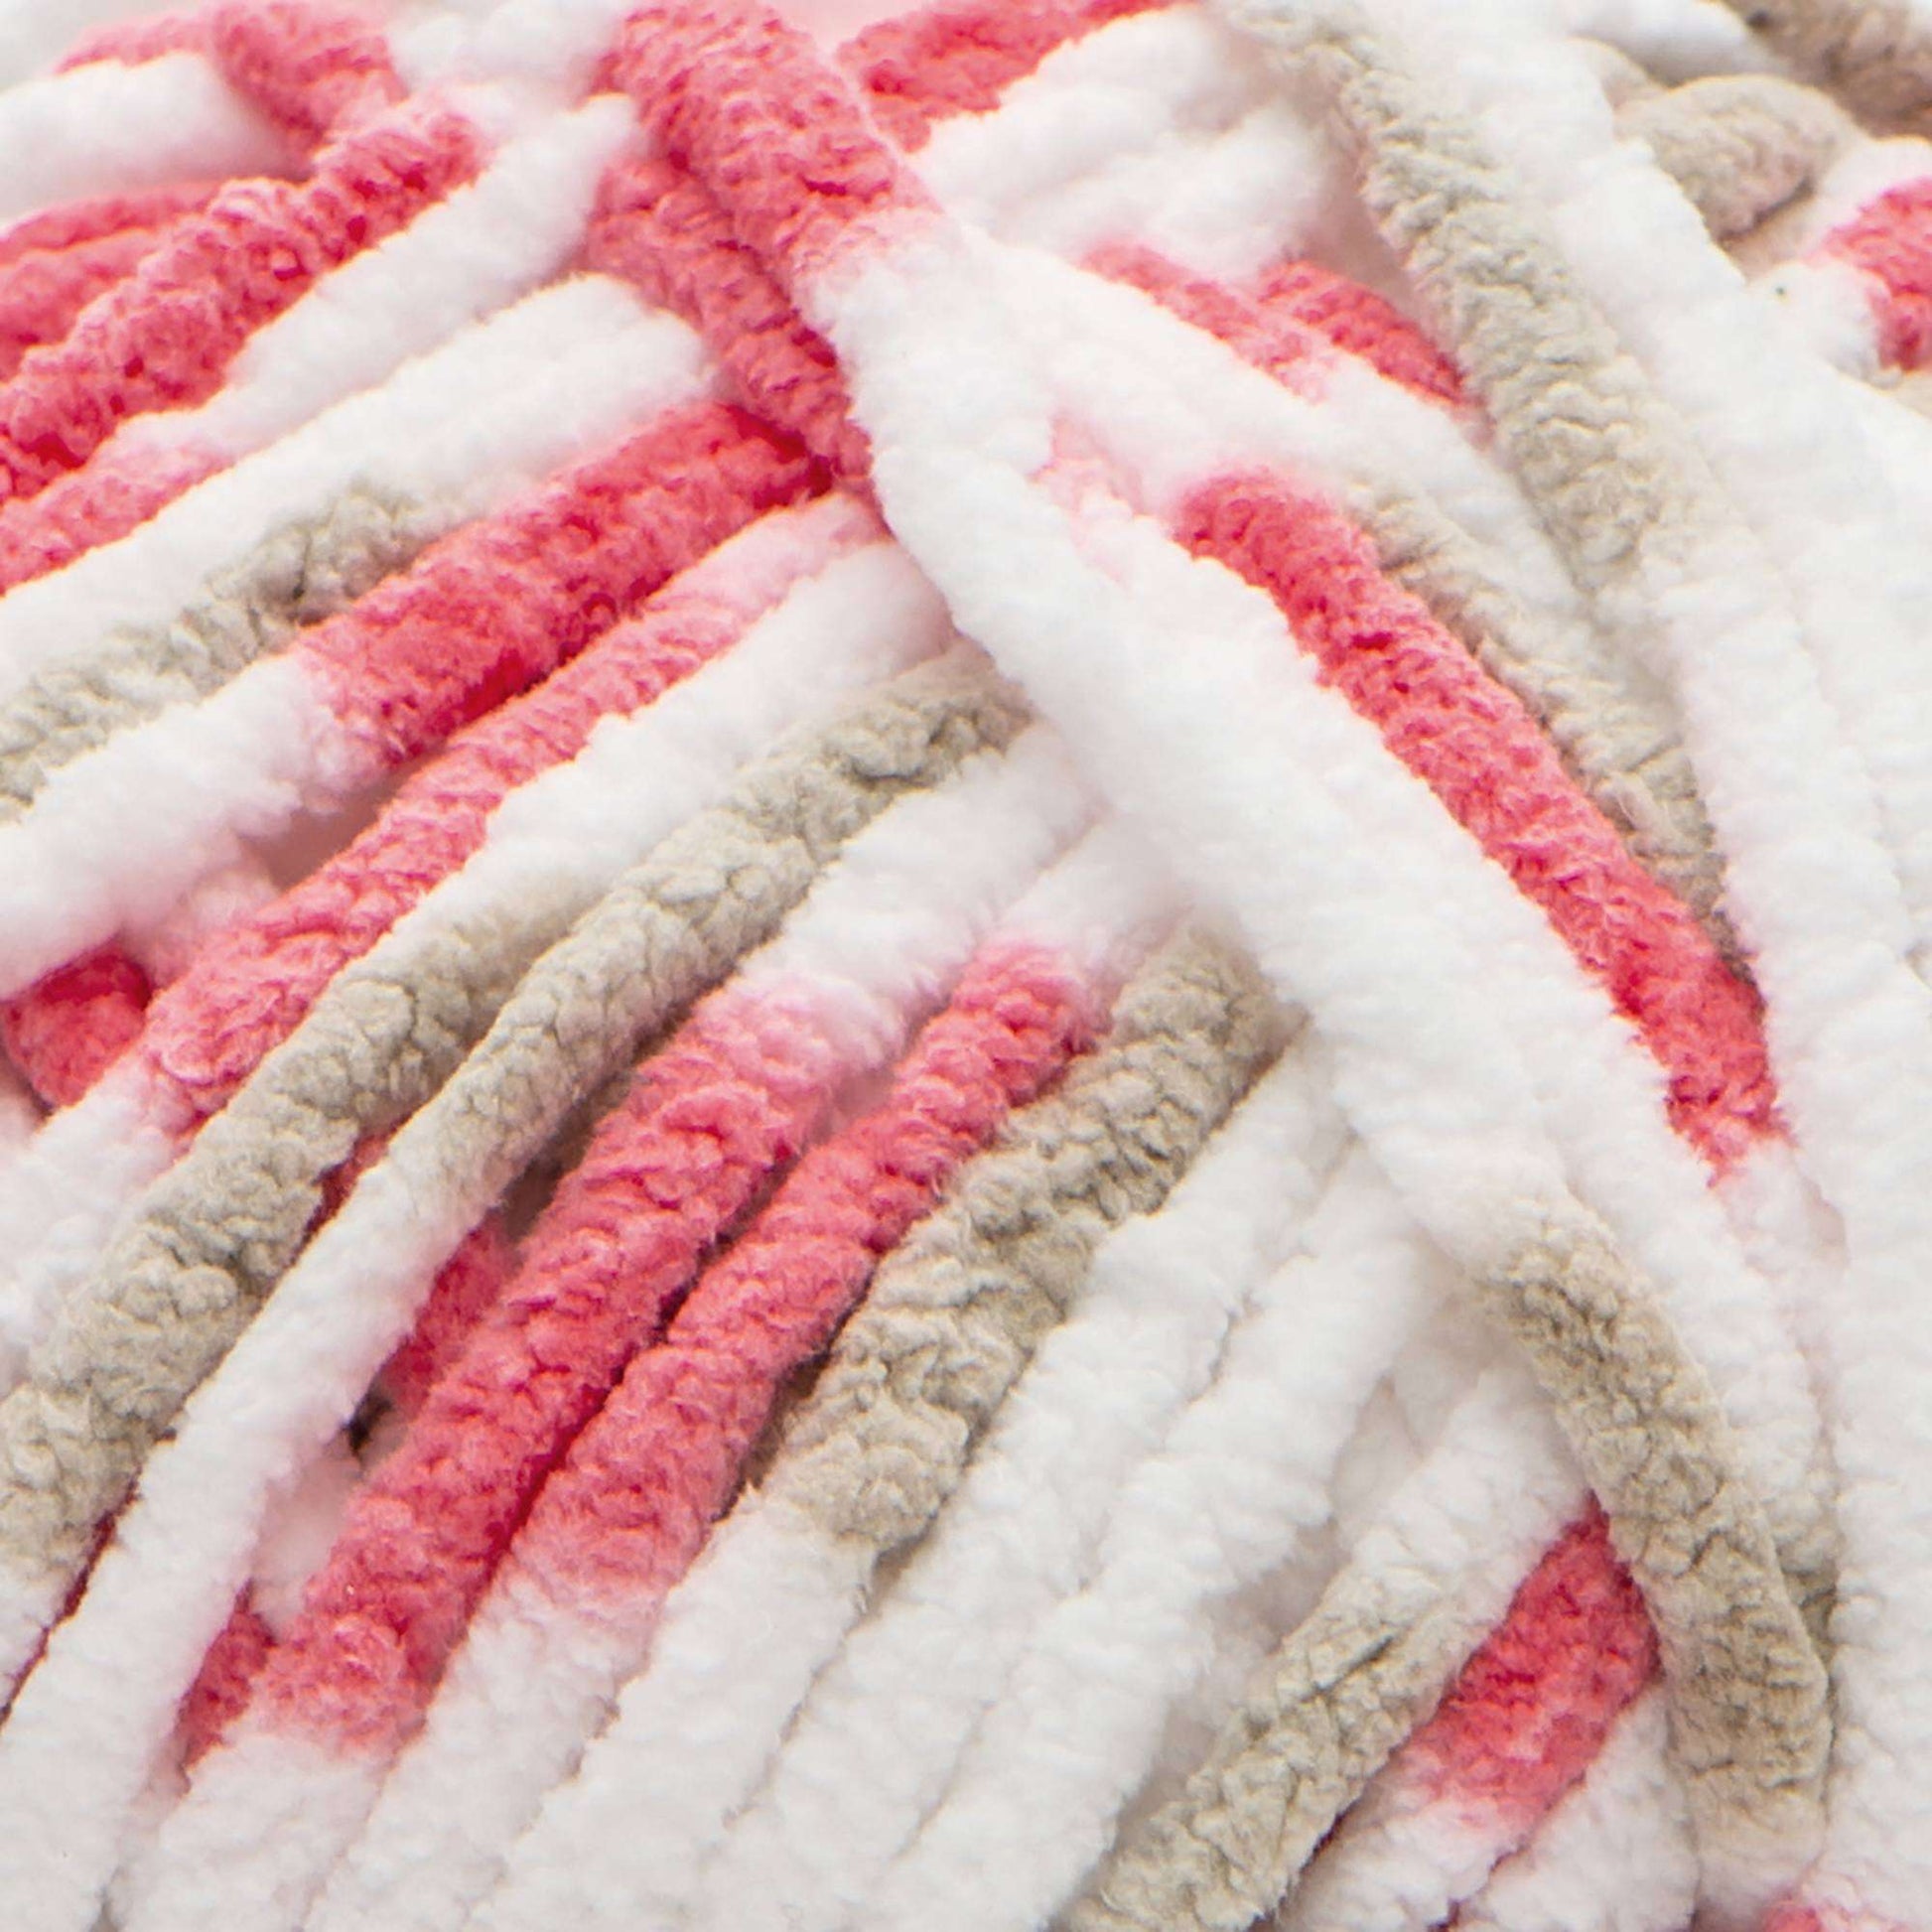 Bernat Baby Blanket Yarn (300g/10.5oz) Flowerpot